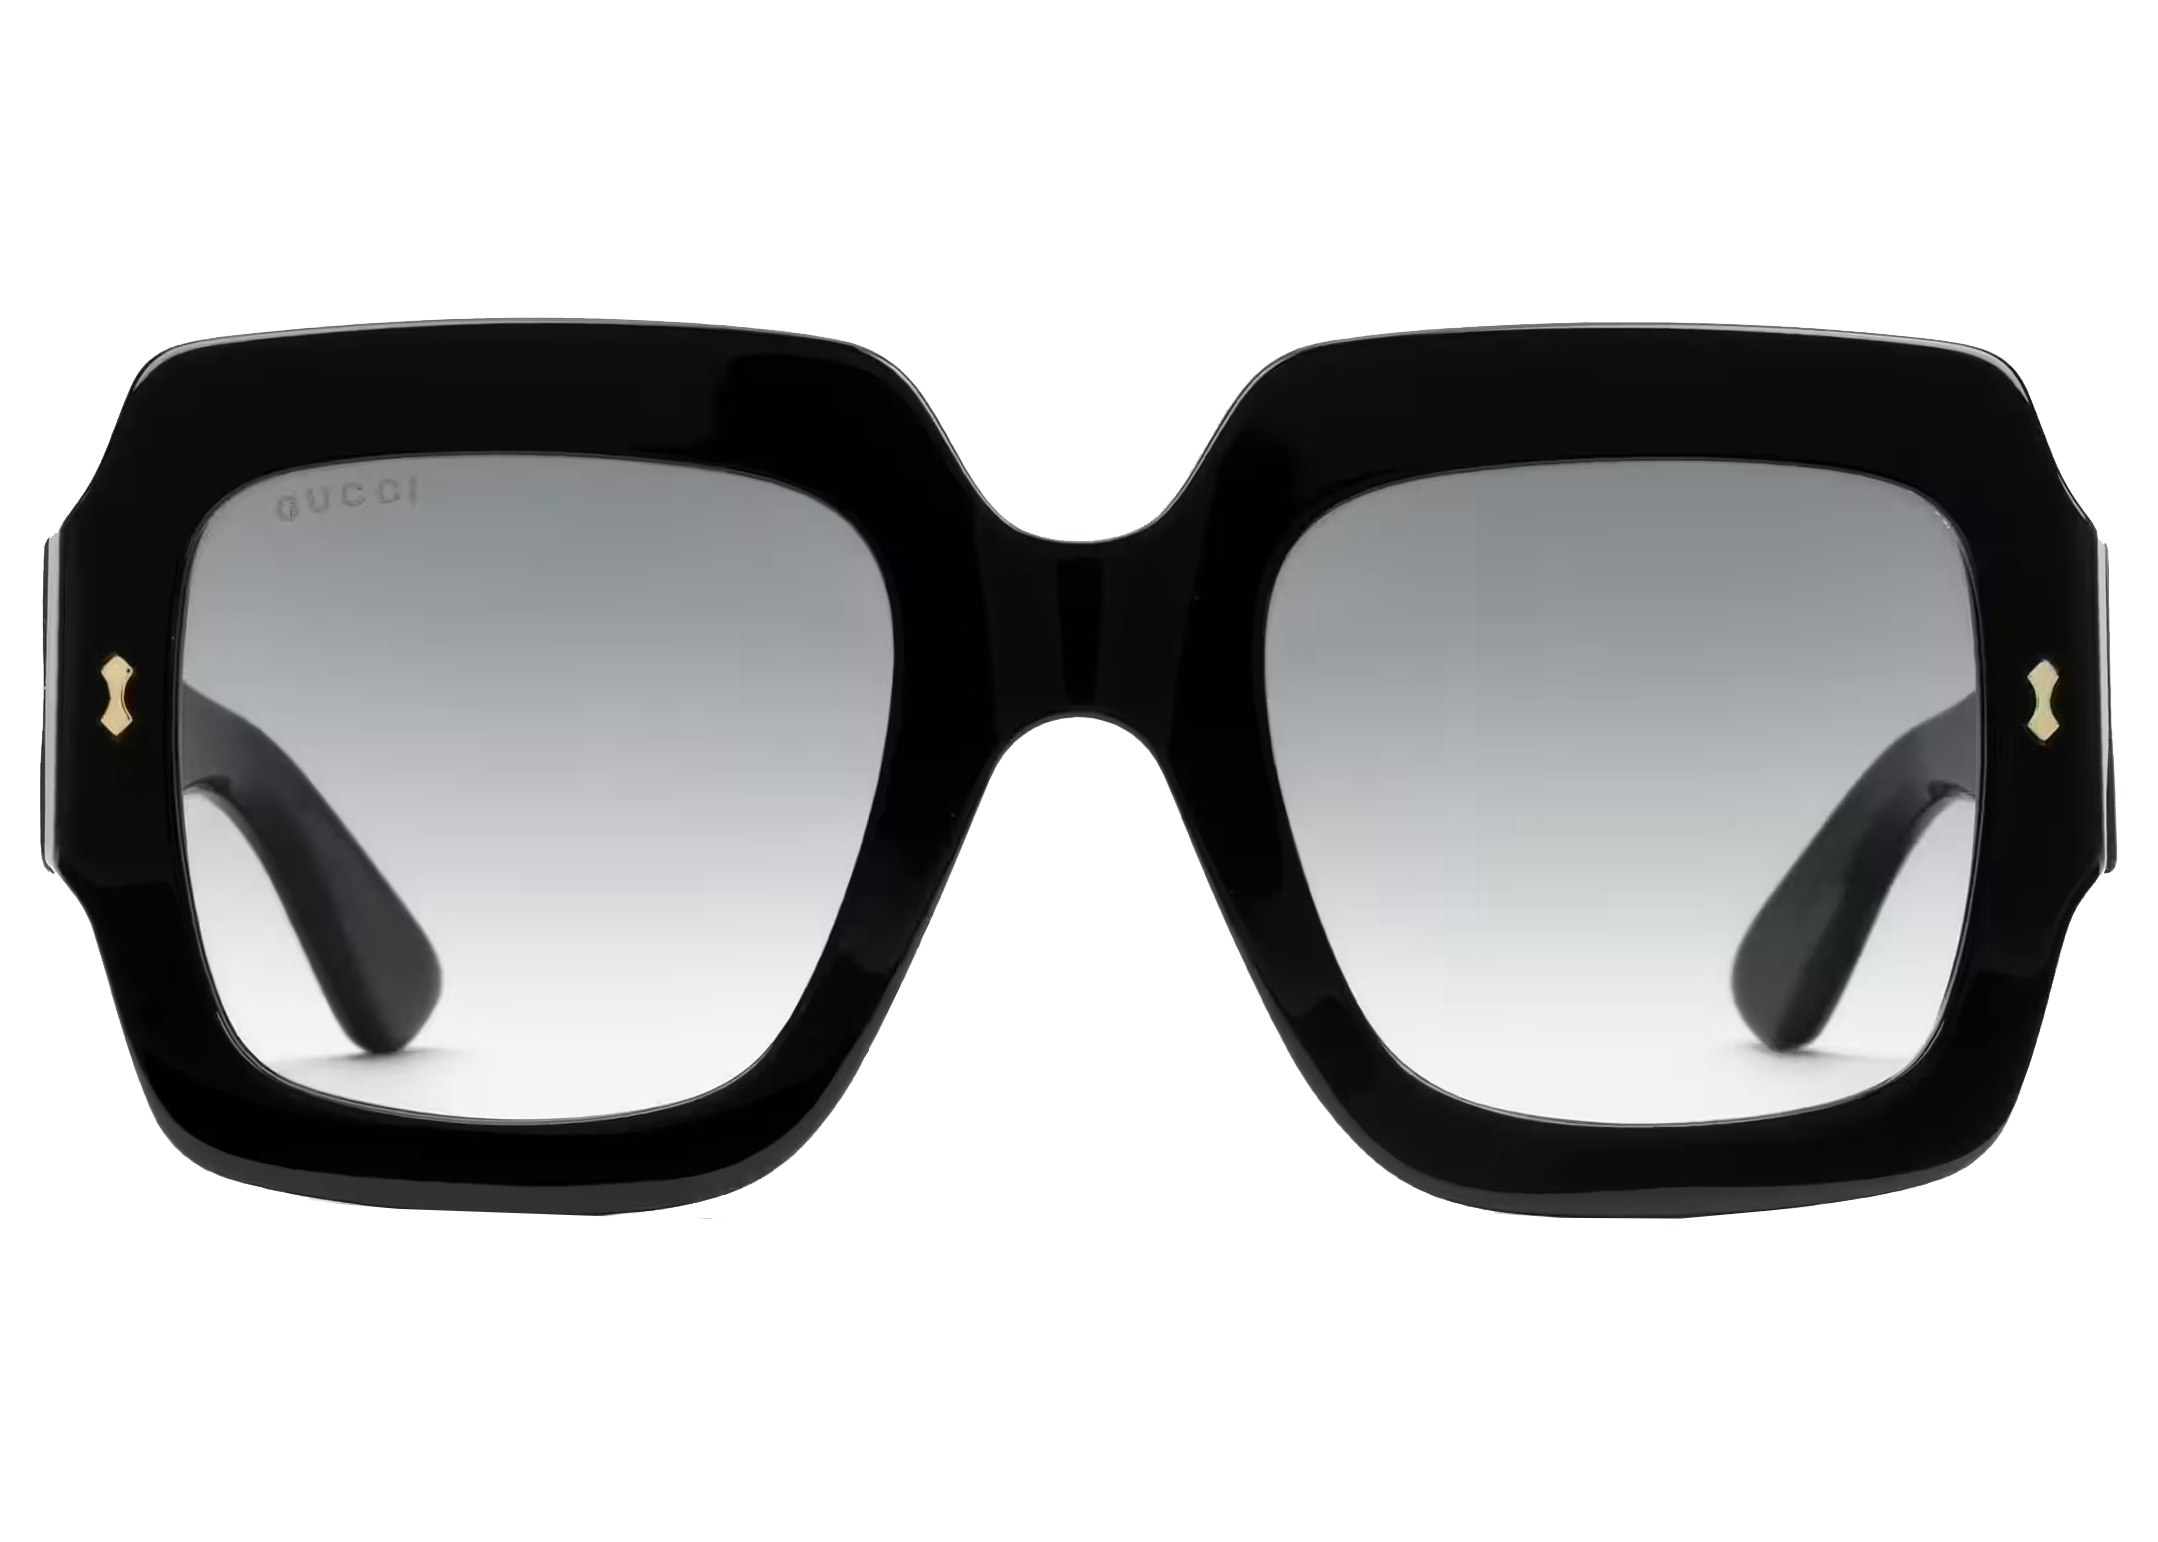 Gucci - Oversize Square-Frame Sunglasses - Black - Gucci Eyewear - Avvenice